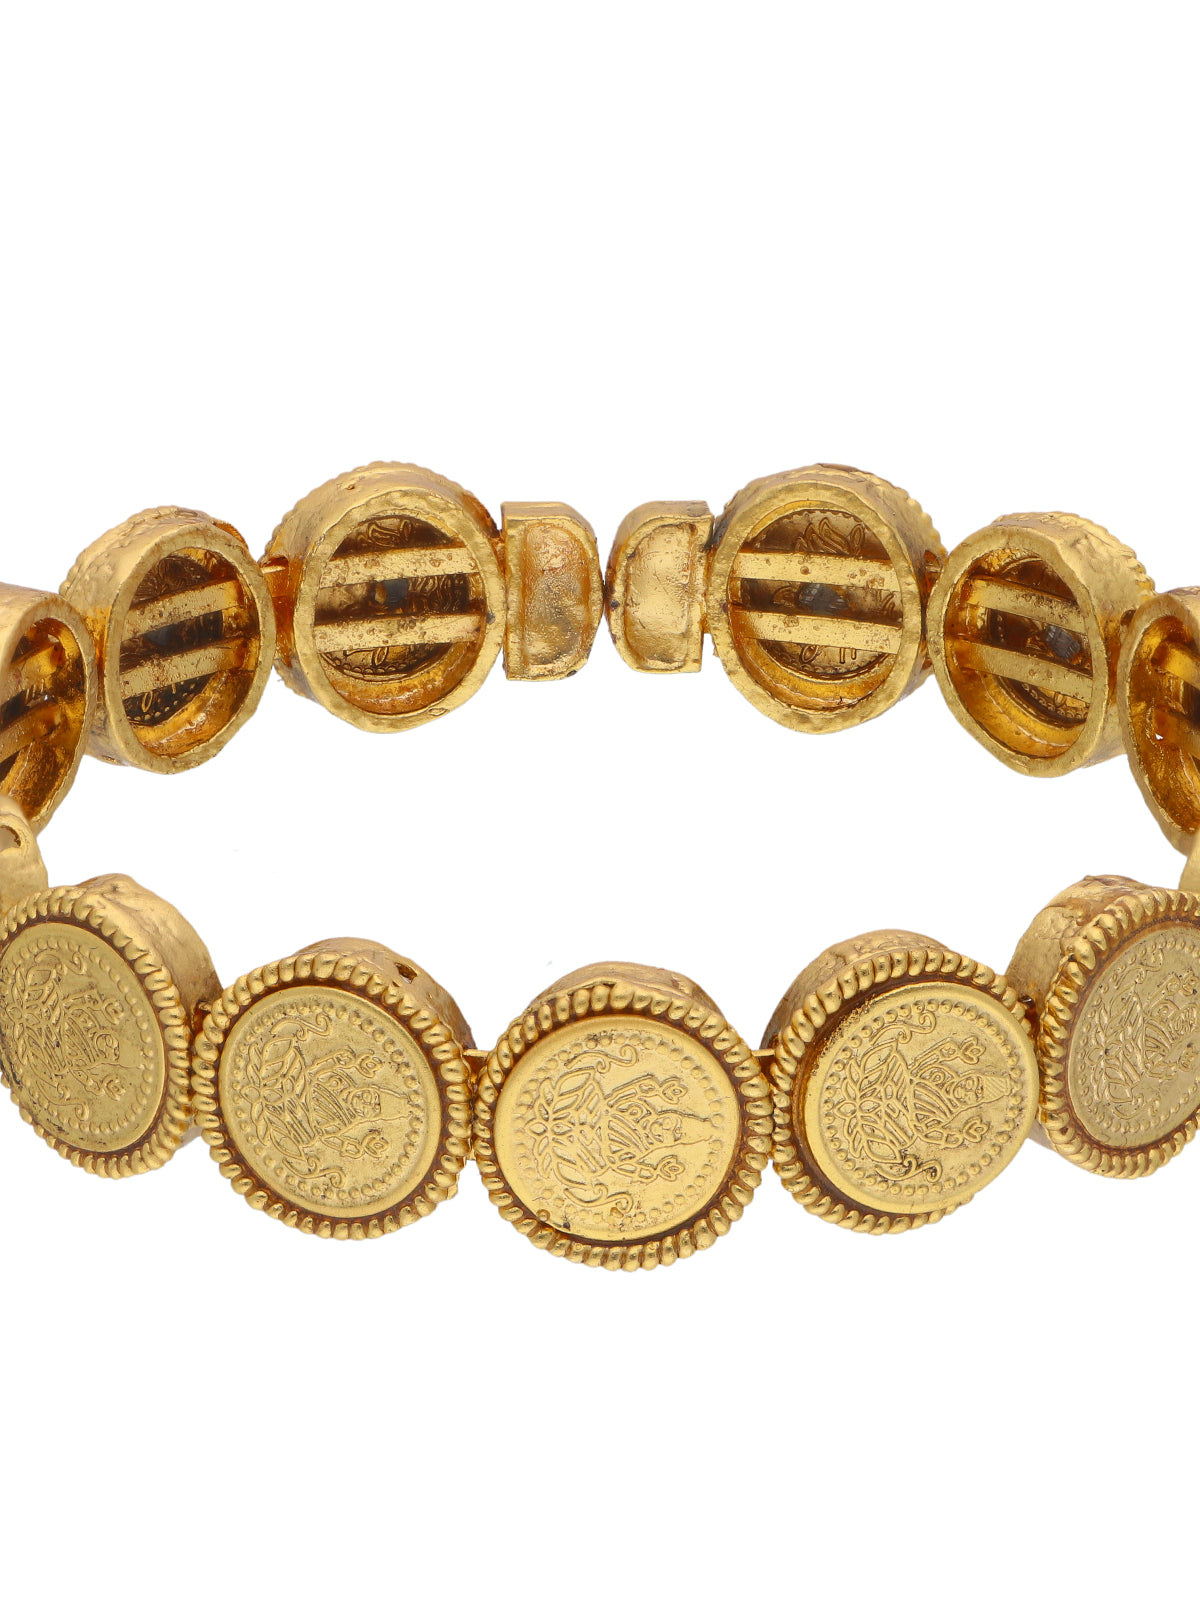 Guinea 22k Gold Bracelets For Men – Stylish Collection - Guinea - The  Hallmark Jewellers